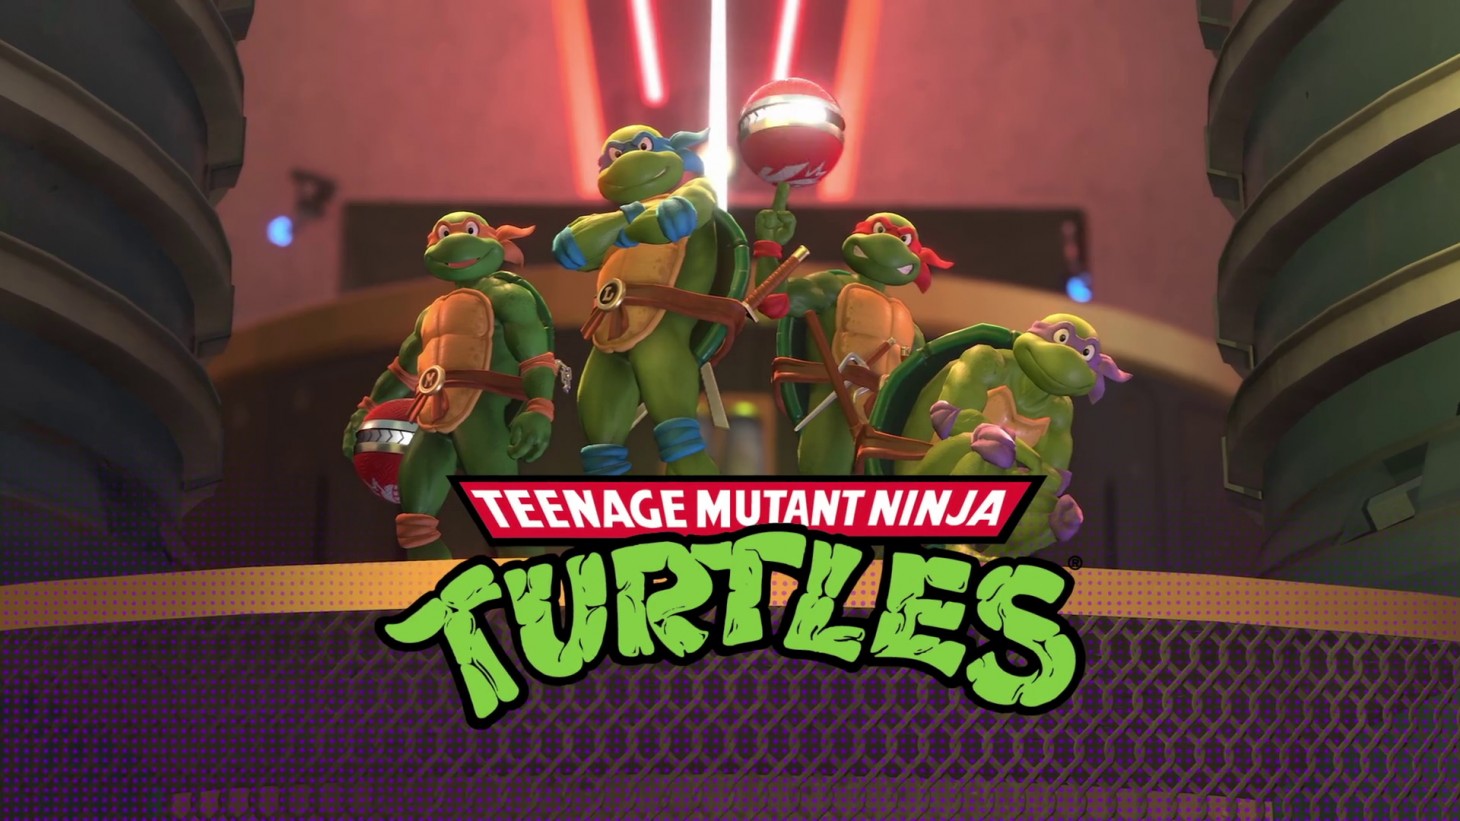 Ninja Turtles are headed to Knockout City